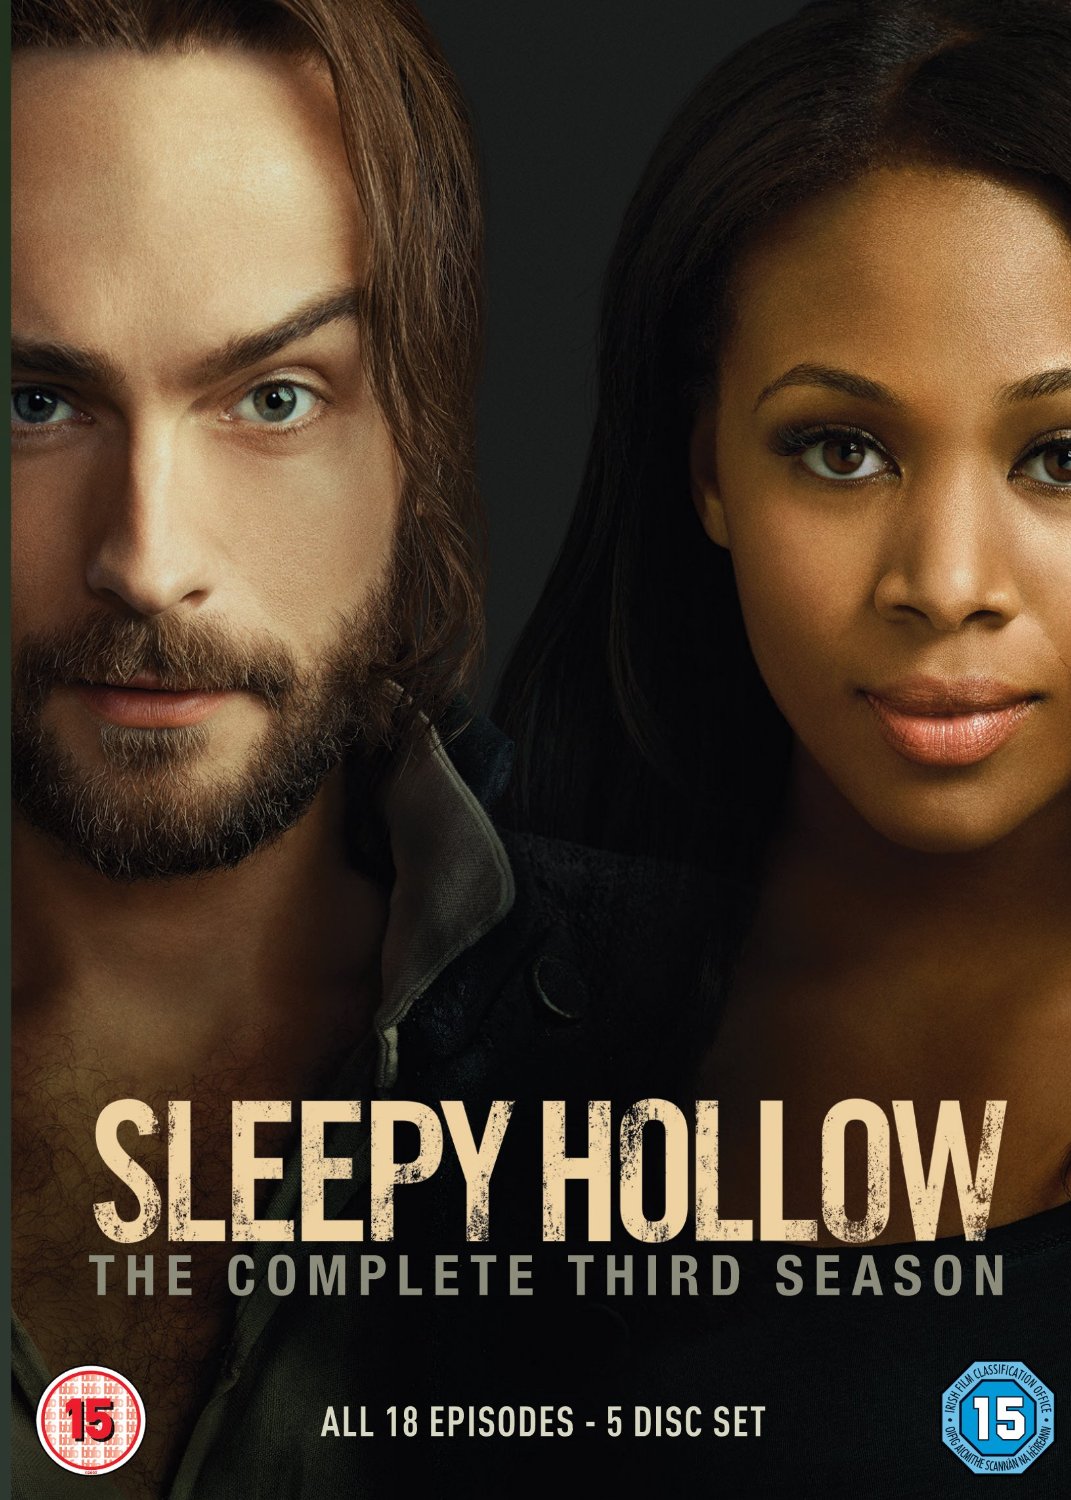 Sleepy Hollow Season 3 DVD review